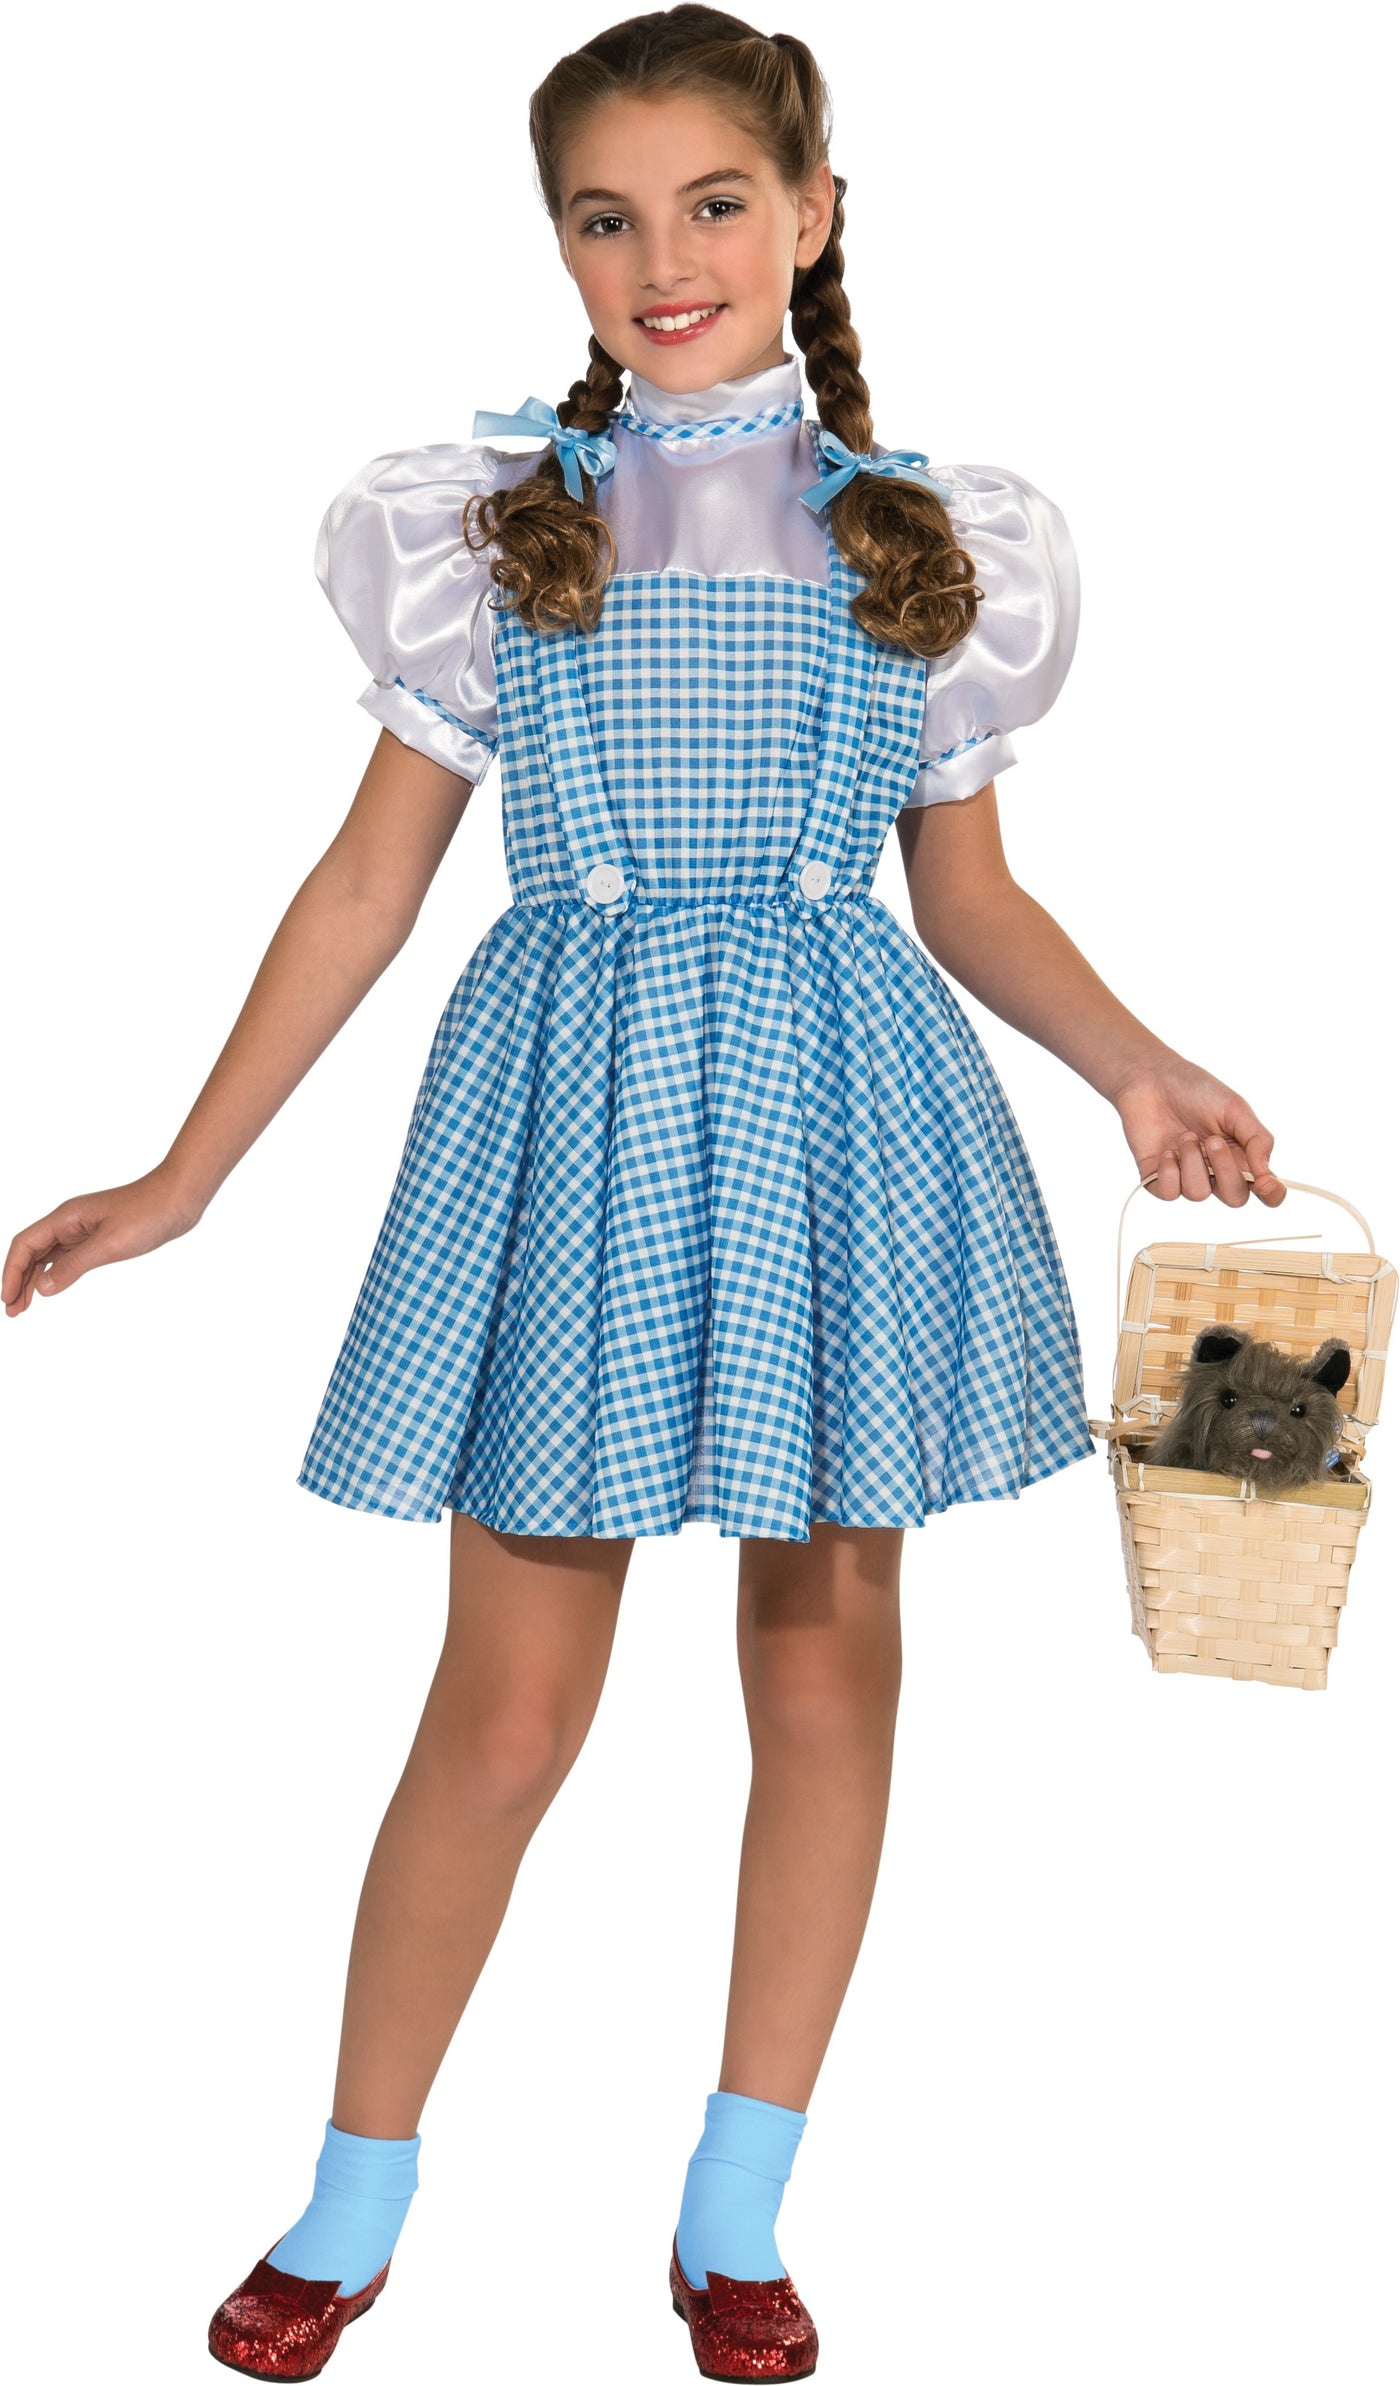 Classic Dorothy Costume